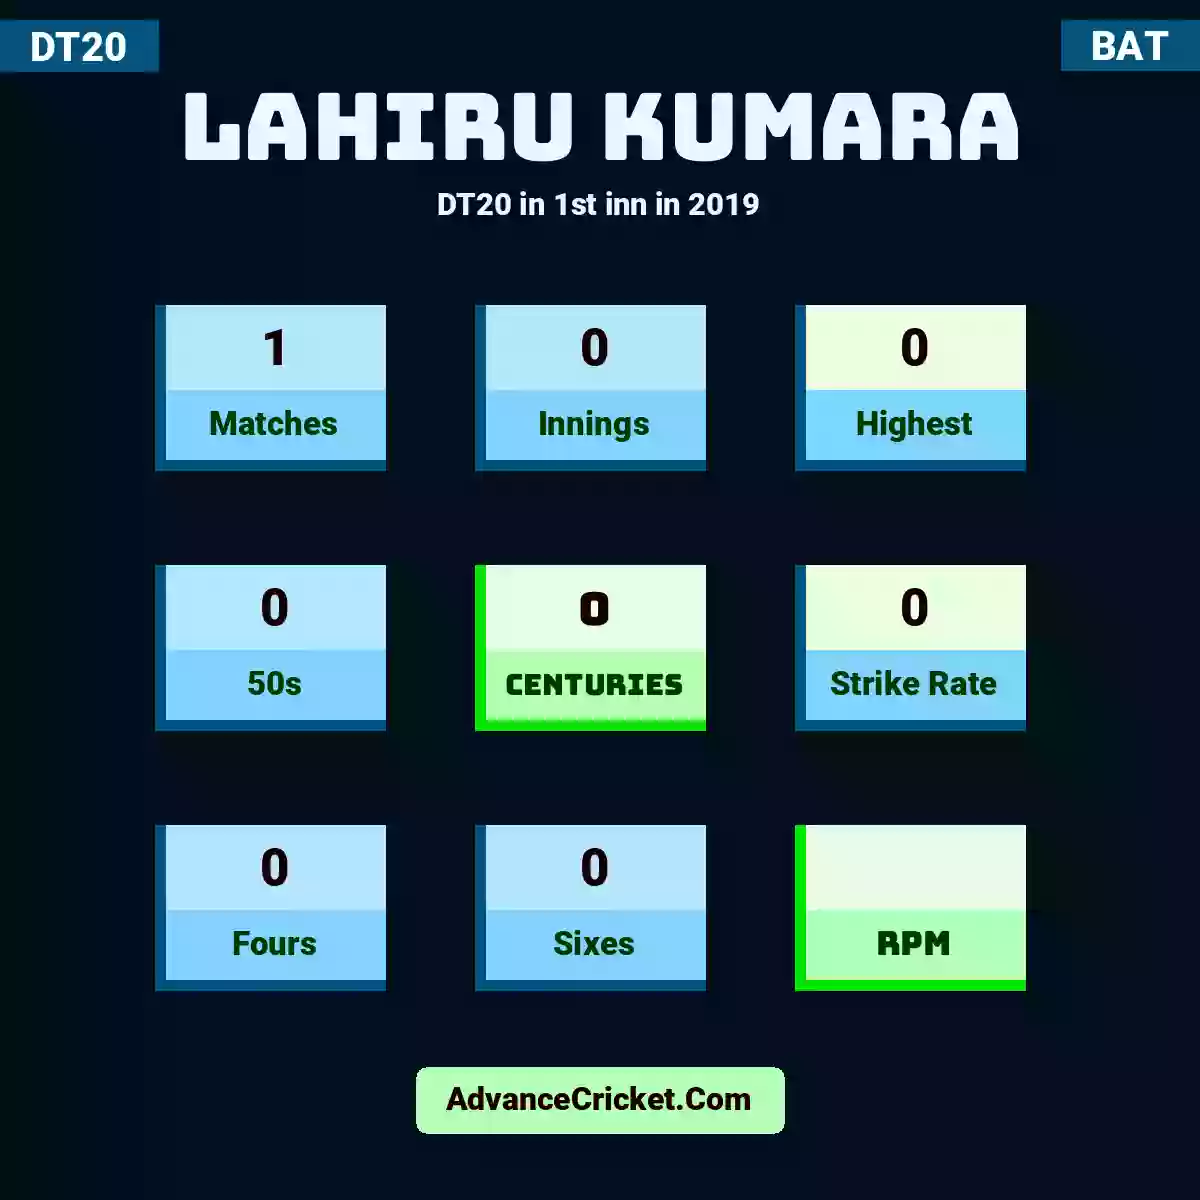 Lahiru Kumara DT20  in 1st inn in 2019, Lahiru Kumara played 1 matches, scored 0 runs as highest, 0 half-centuries, and 0 centuries, with a strike rate of 0. L.Kumara hit 0 fours and 0 sixes.